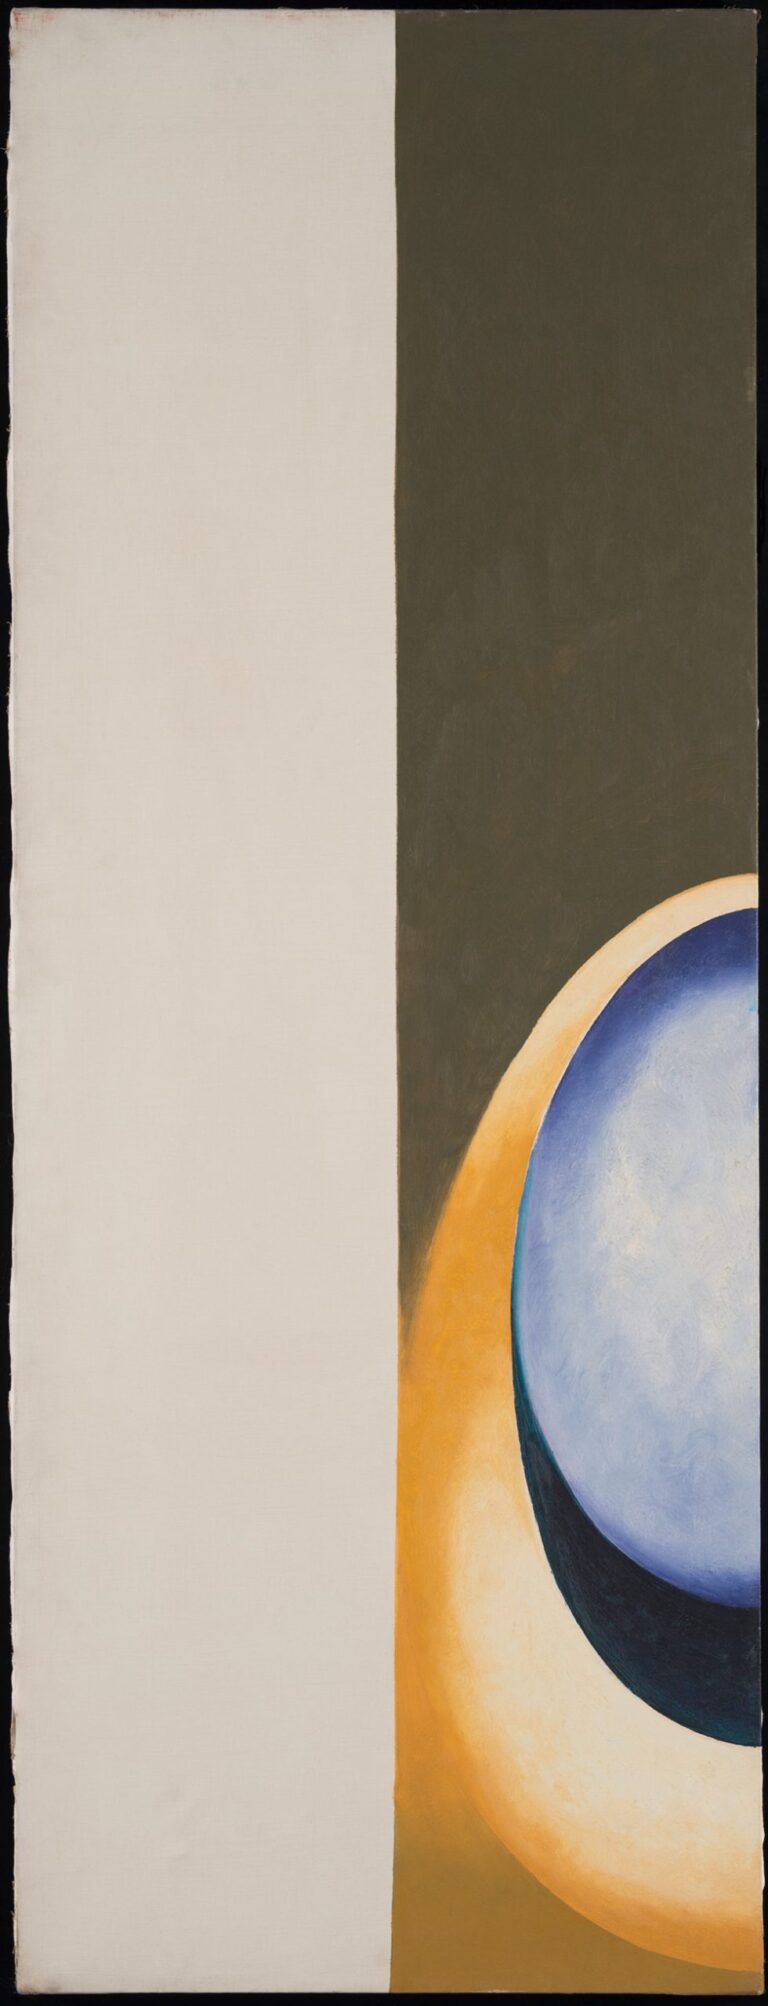 1974 - Oil on canvas - cm 160x120